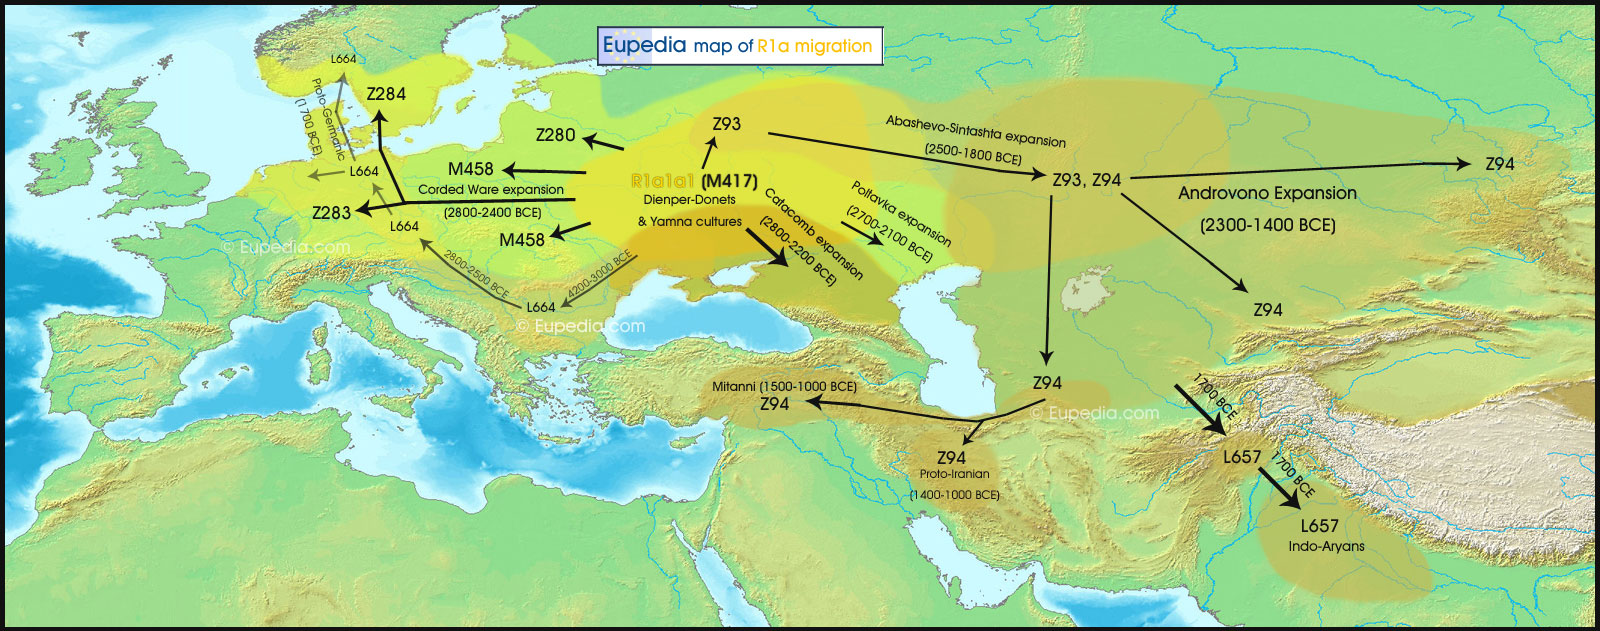 http://www.eupedia.com/images/content/R1a_migration_map.jpg